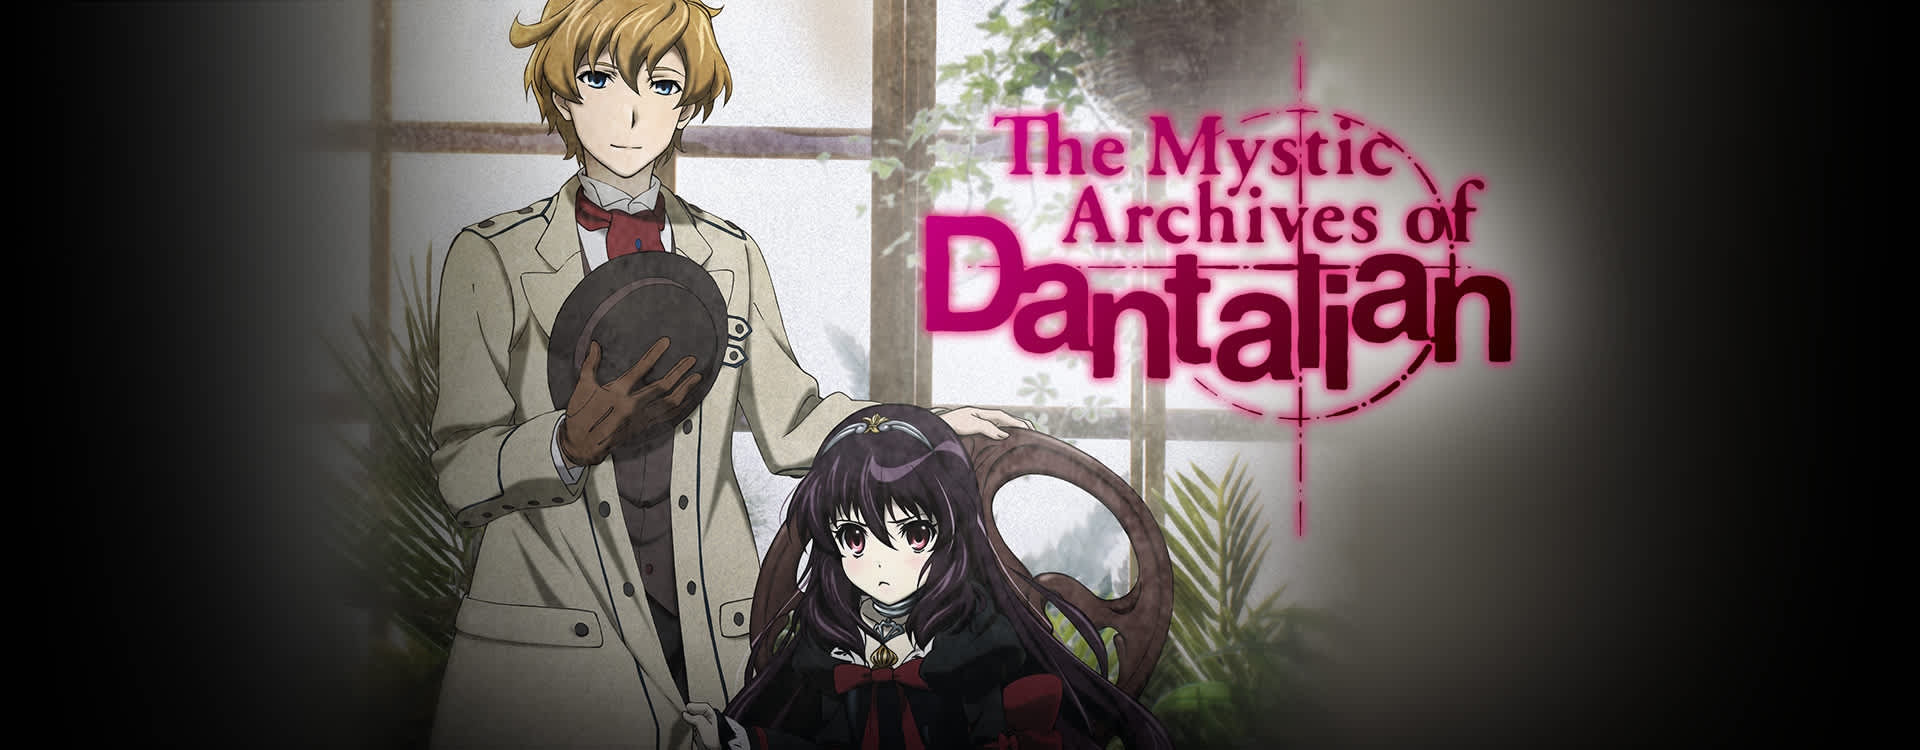 The Mystic Archives of Dantalian anime